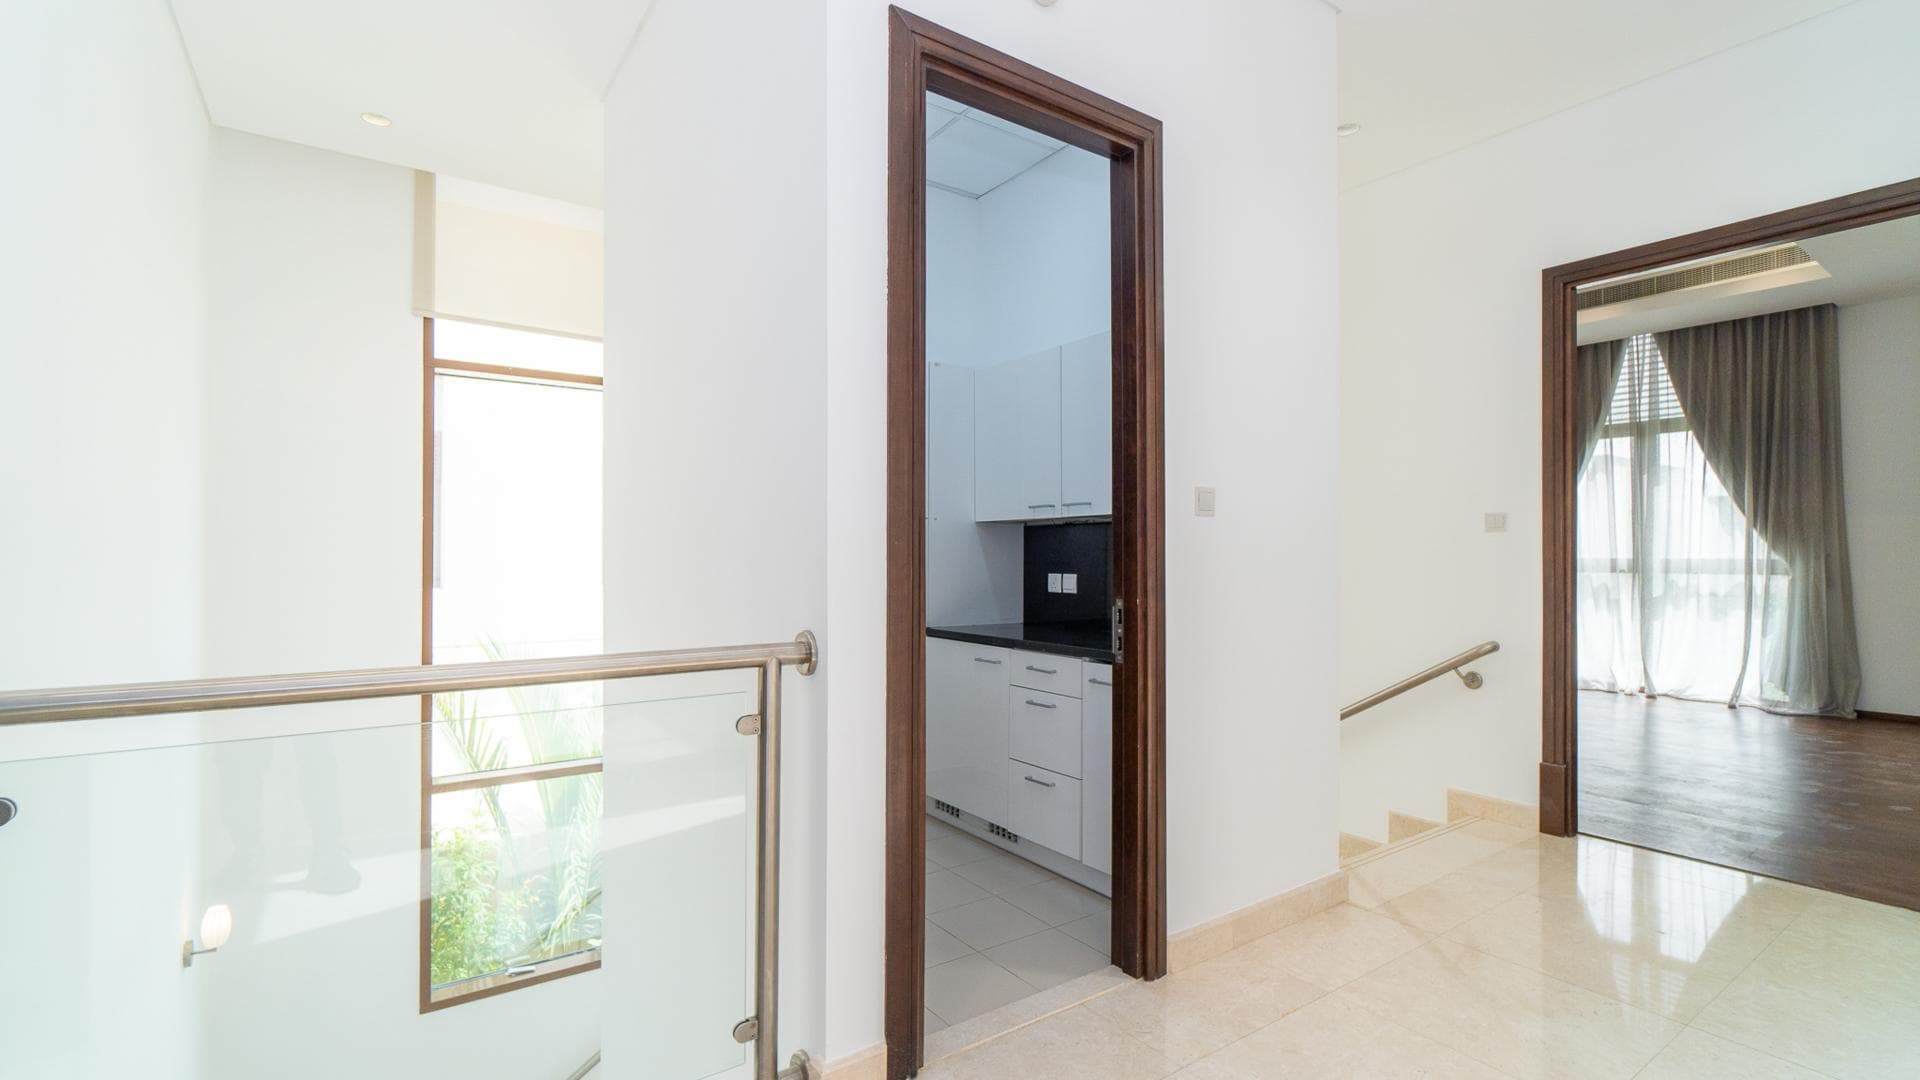 5 Bedroom Villa For Rent Meydan Gated Community Lp13586 1bc1318b07286a00.jpg